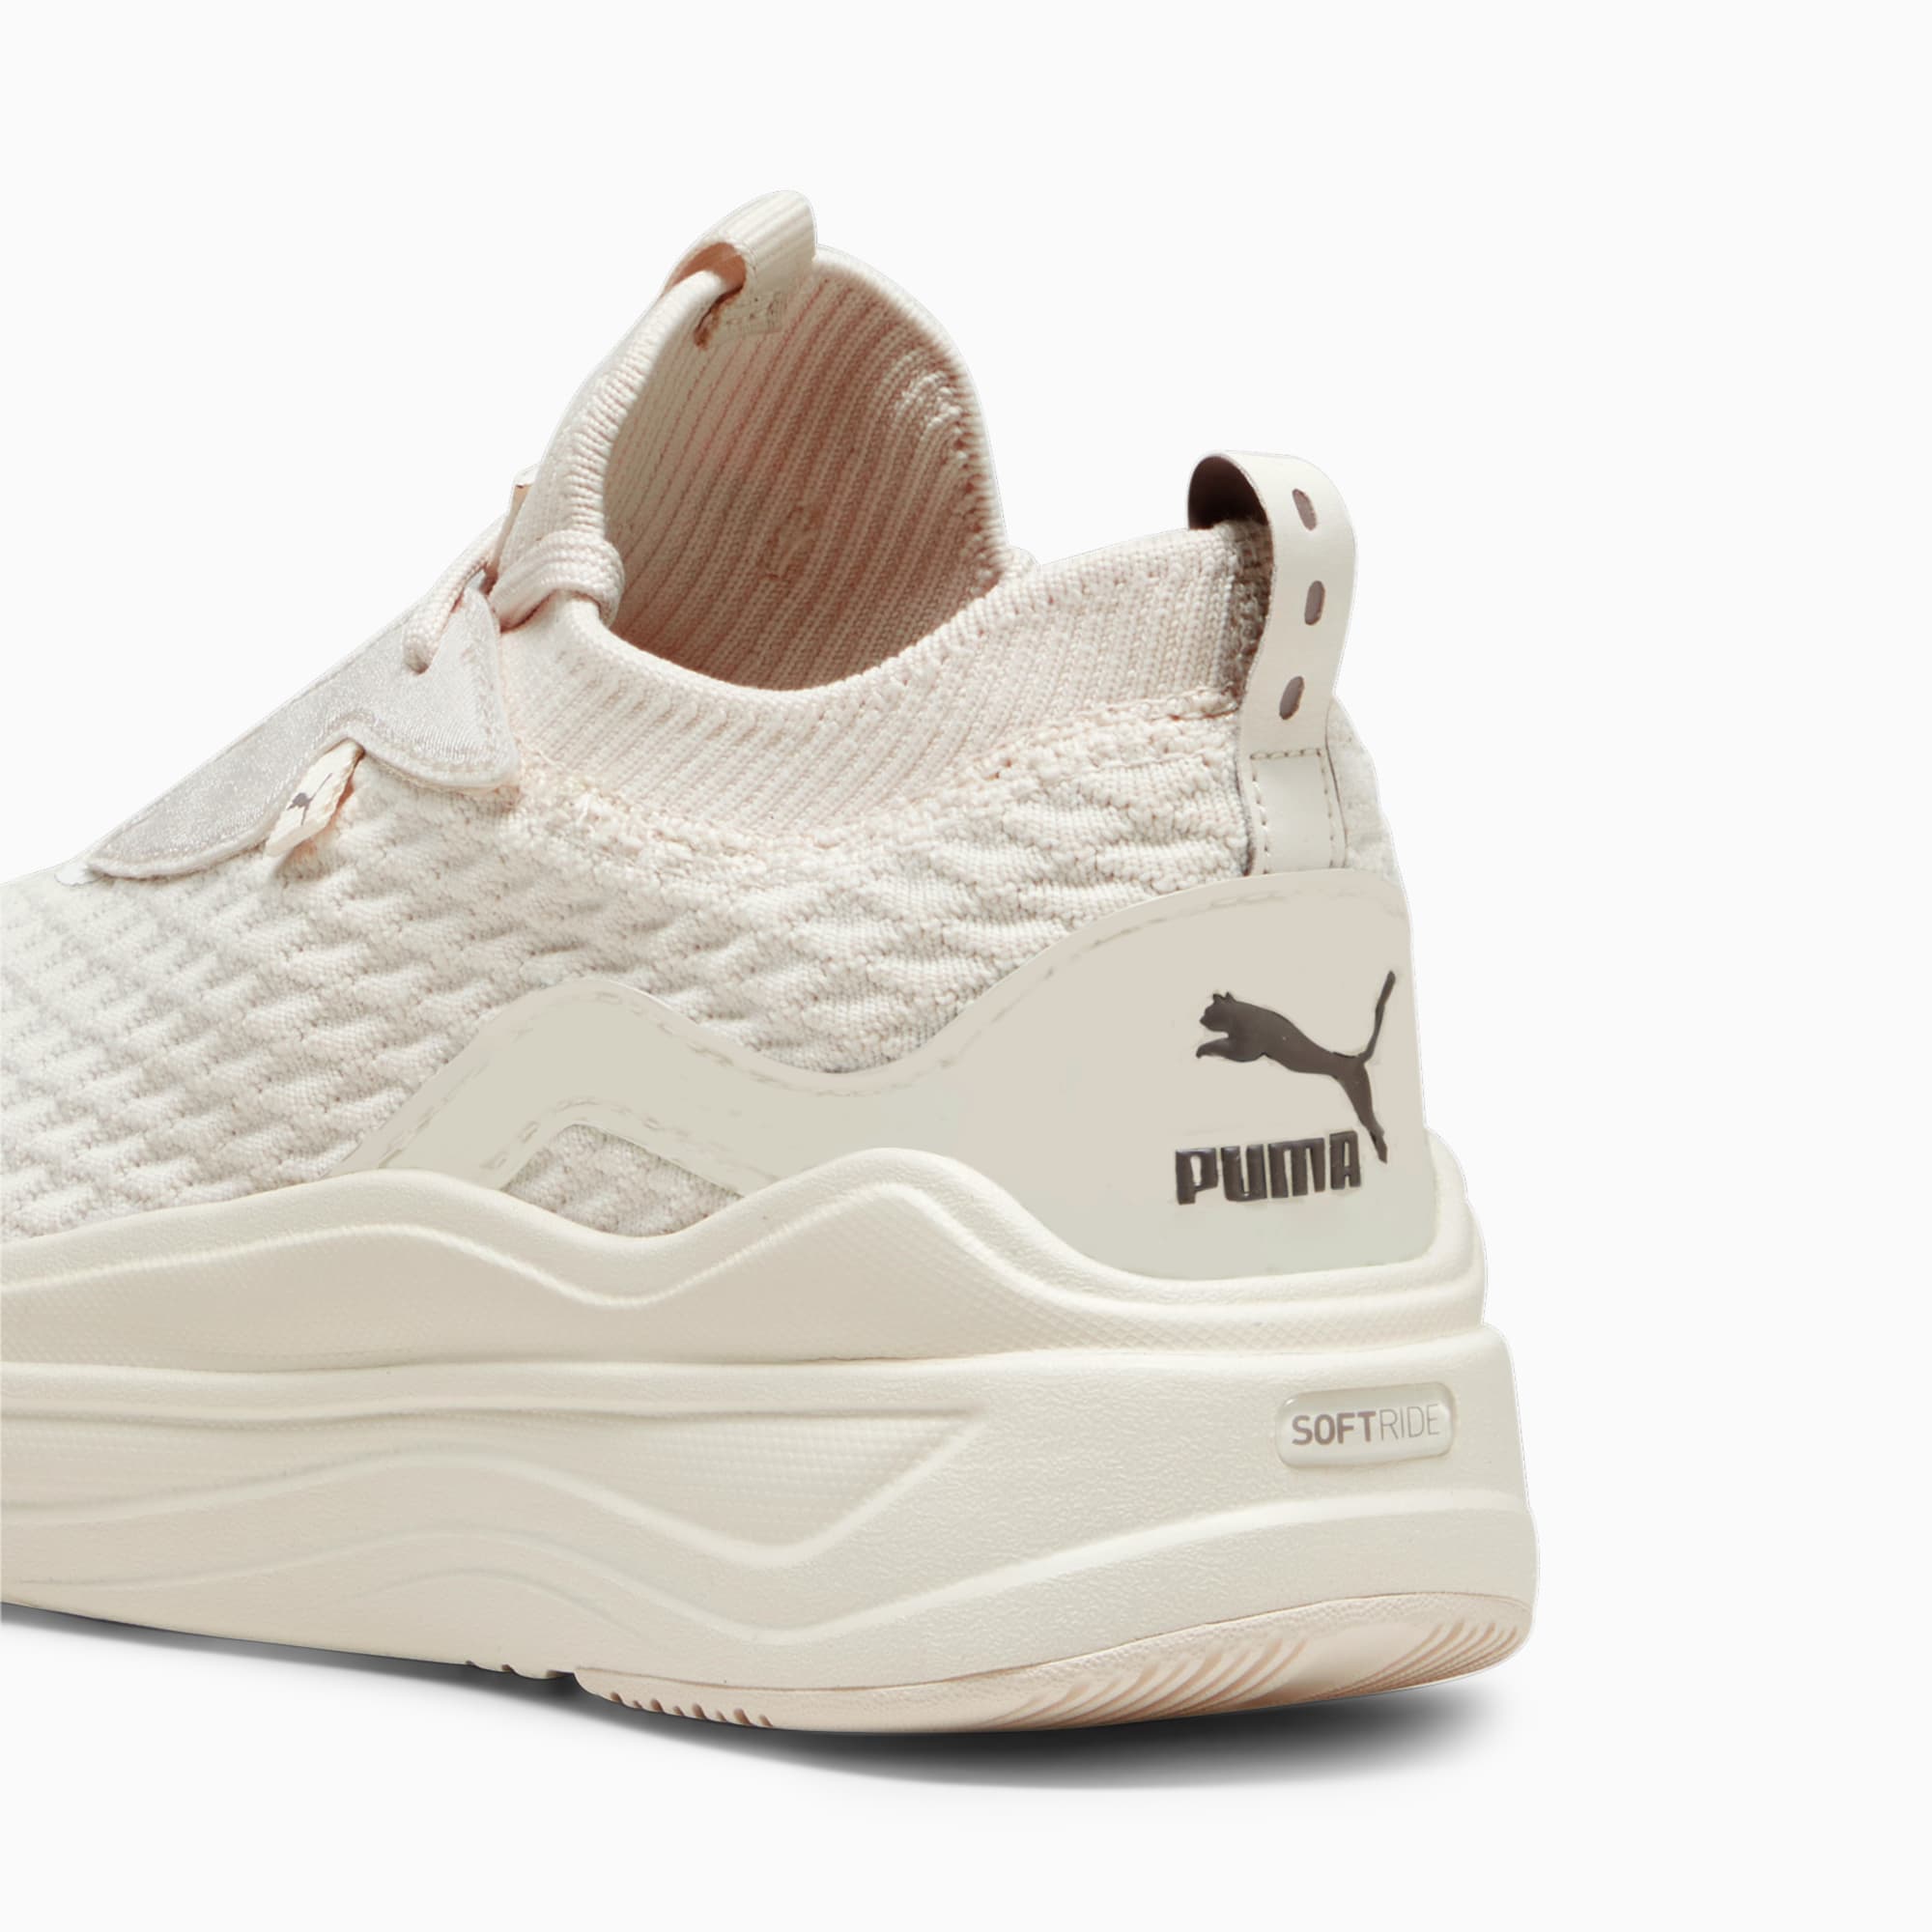 PUMA Softride Stakd Premium Women's Running Shoe Sneakers, Warm White/Alpine Snow/Dark Clove, Size 37, Shoes